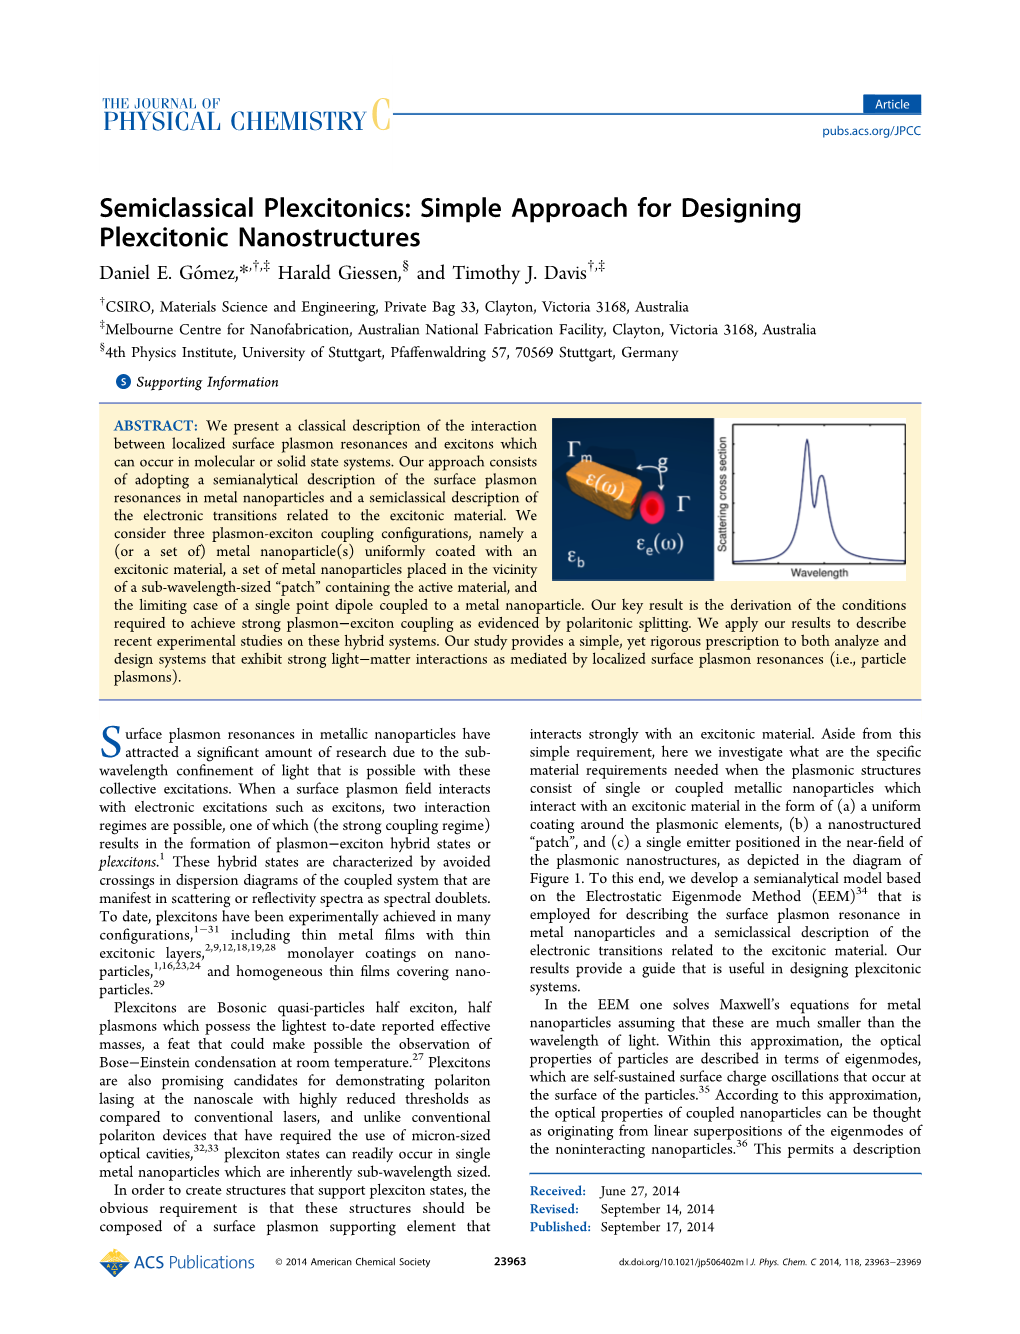 Simple Approach for Designing Plexcitonic Nanostructures Daniel E